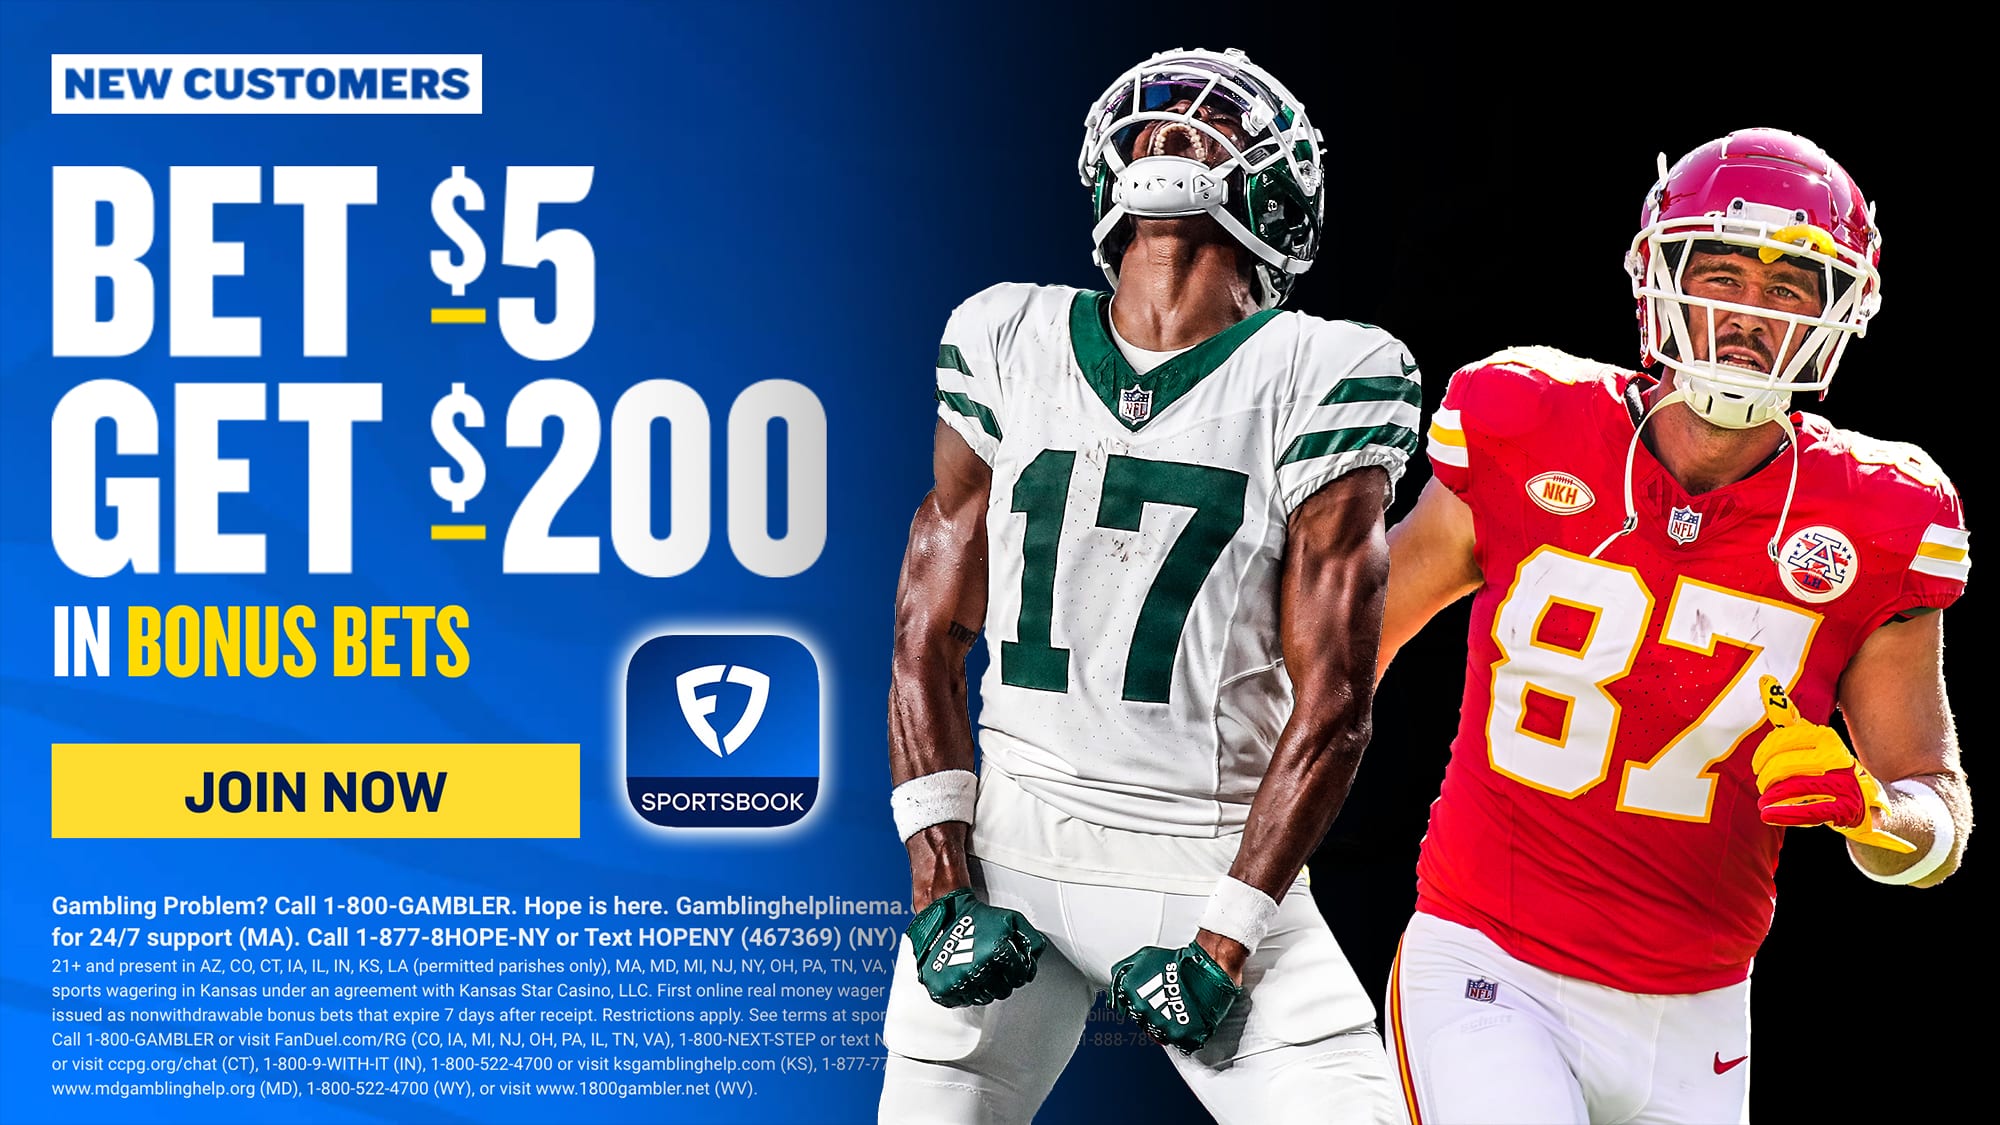 FanDuel Promo Code: $200 Instant Sportsbook Bonus, New York Jets vs. Kansas City Chiefs